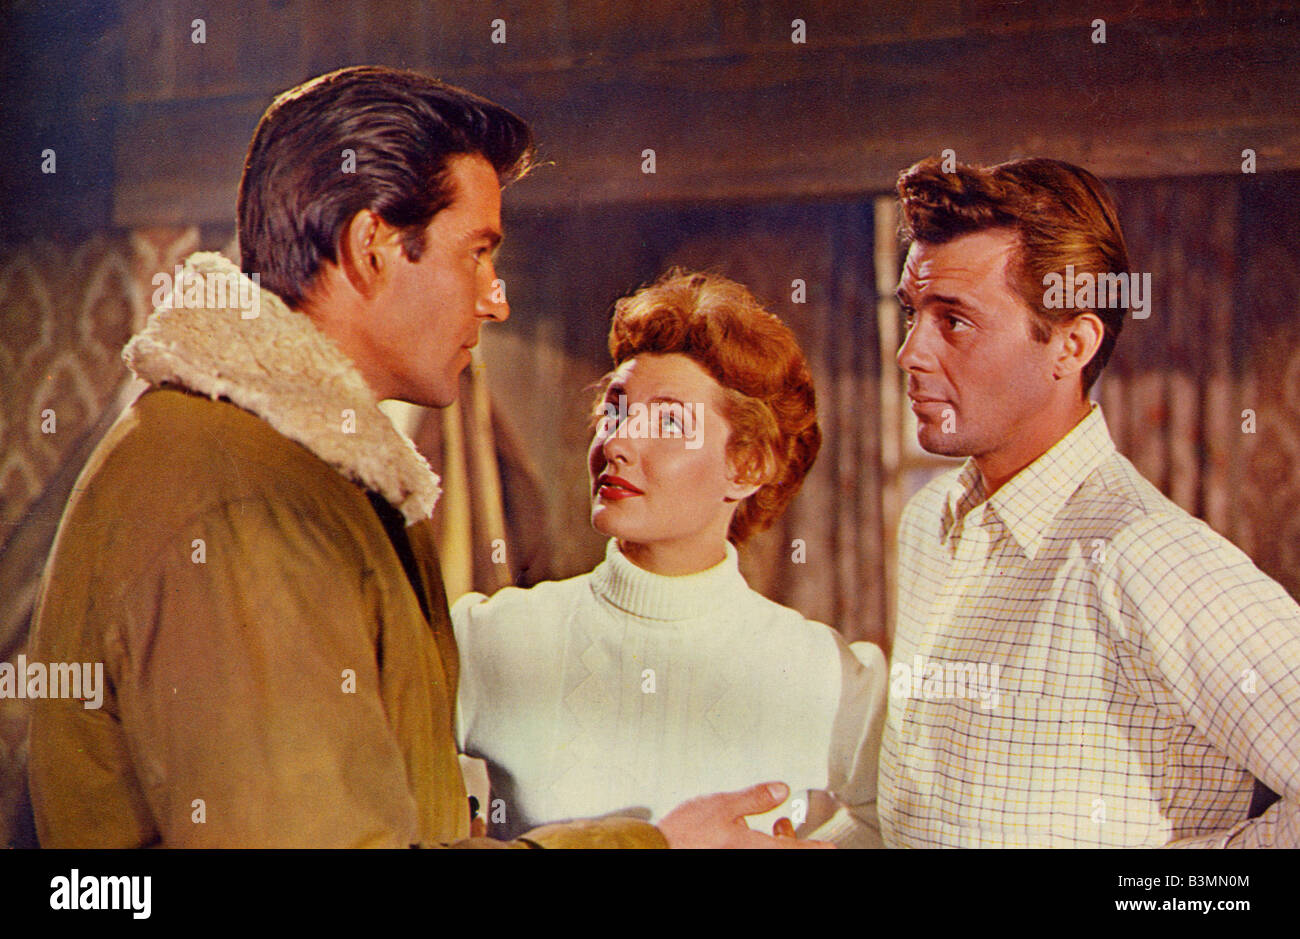 CAMPBELL'S KINGDOM 1957 Rank film avec Dirk Bogarde à droite, Barbara Murray et Stewart Granger Banque D'Images